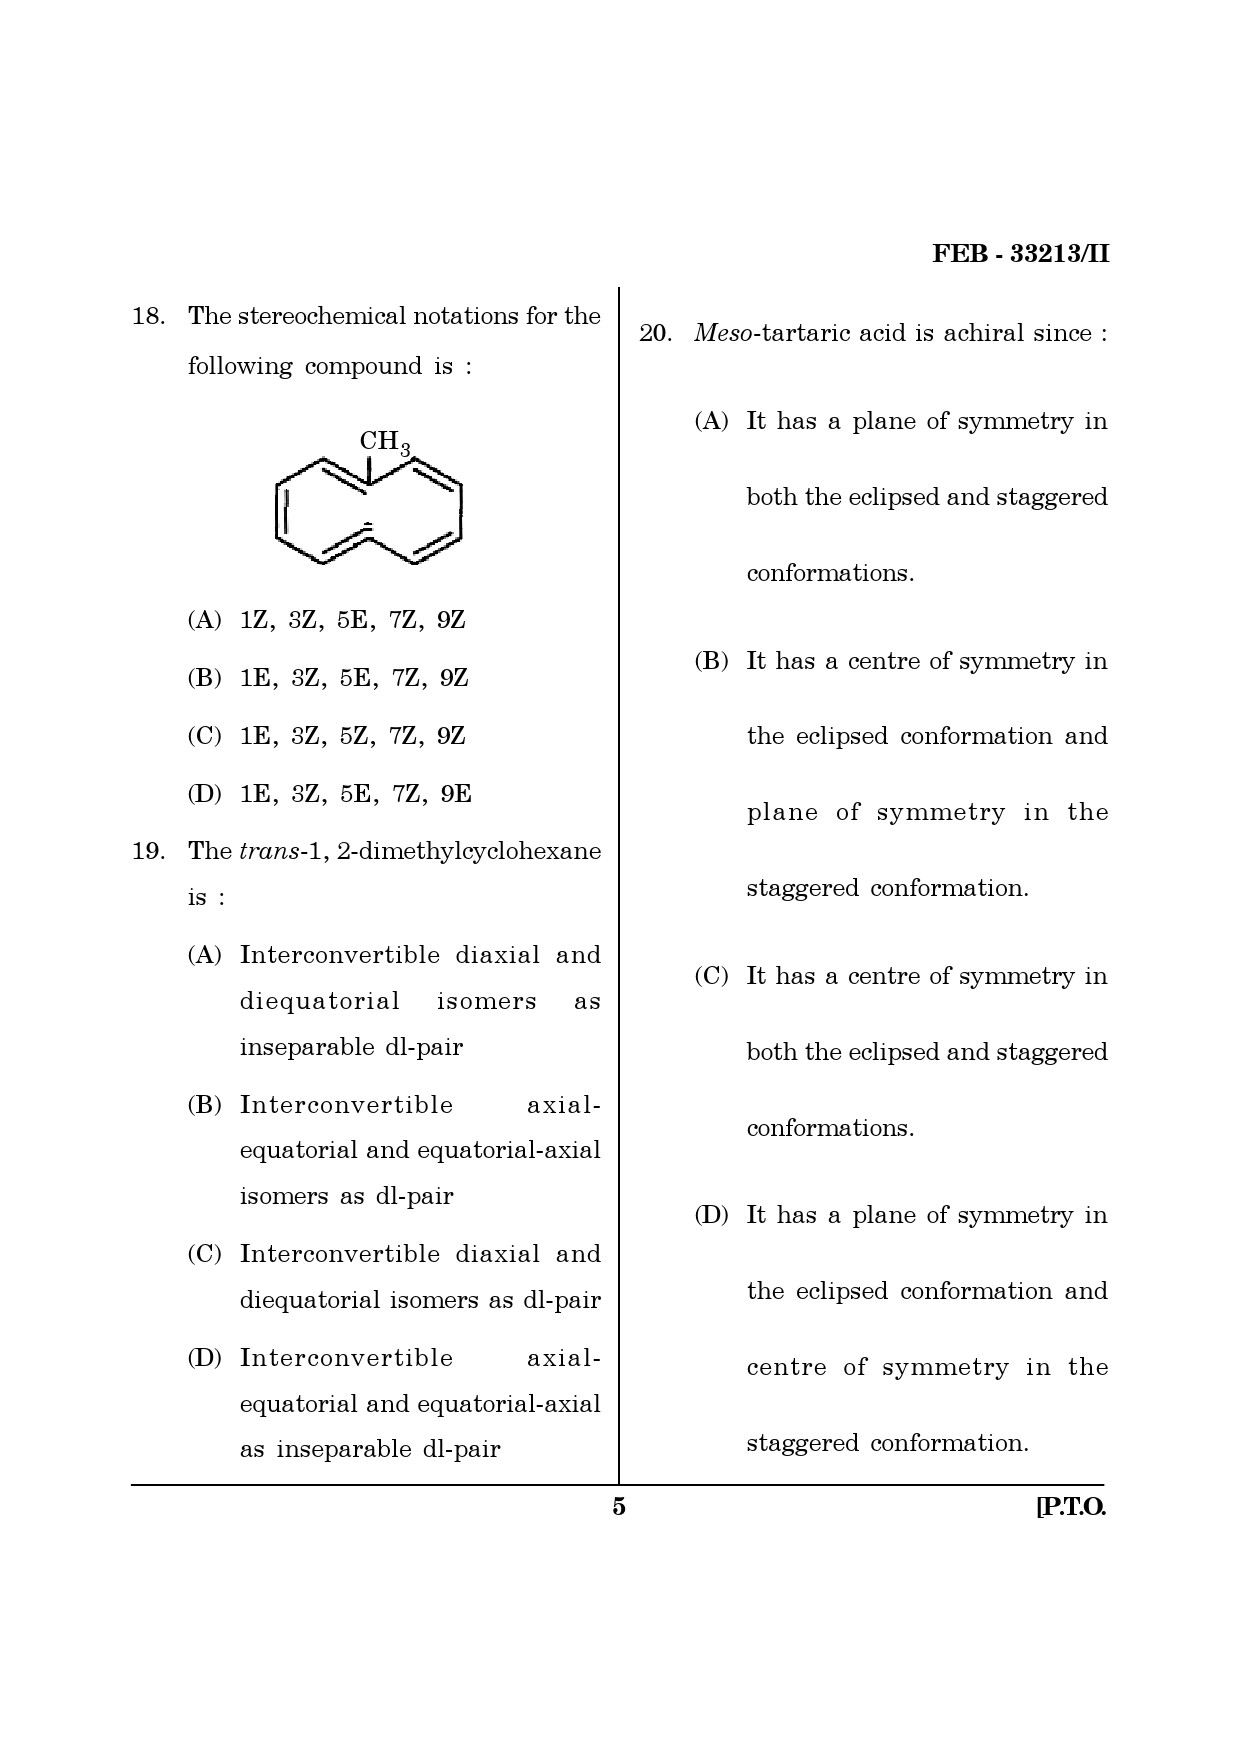 Maharashtra SET Chemical Sciences Question Paper II February 2013 5